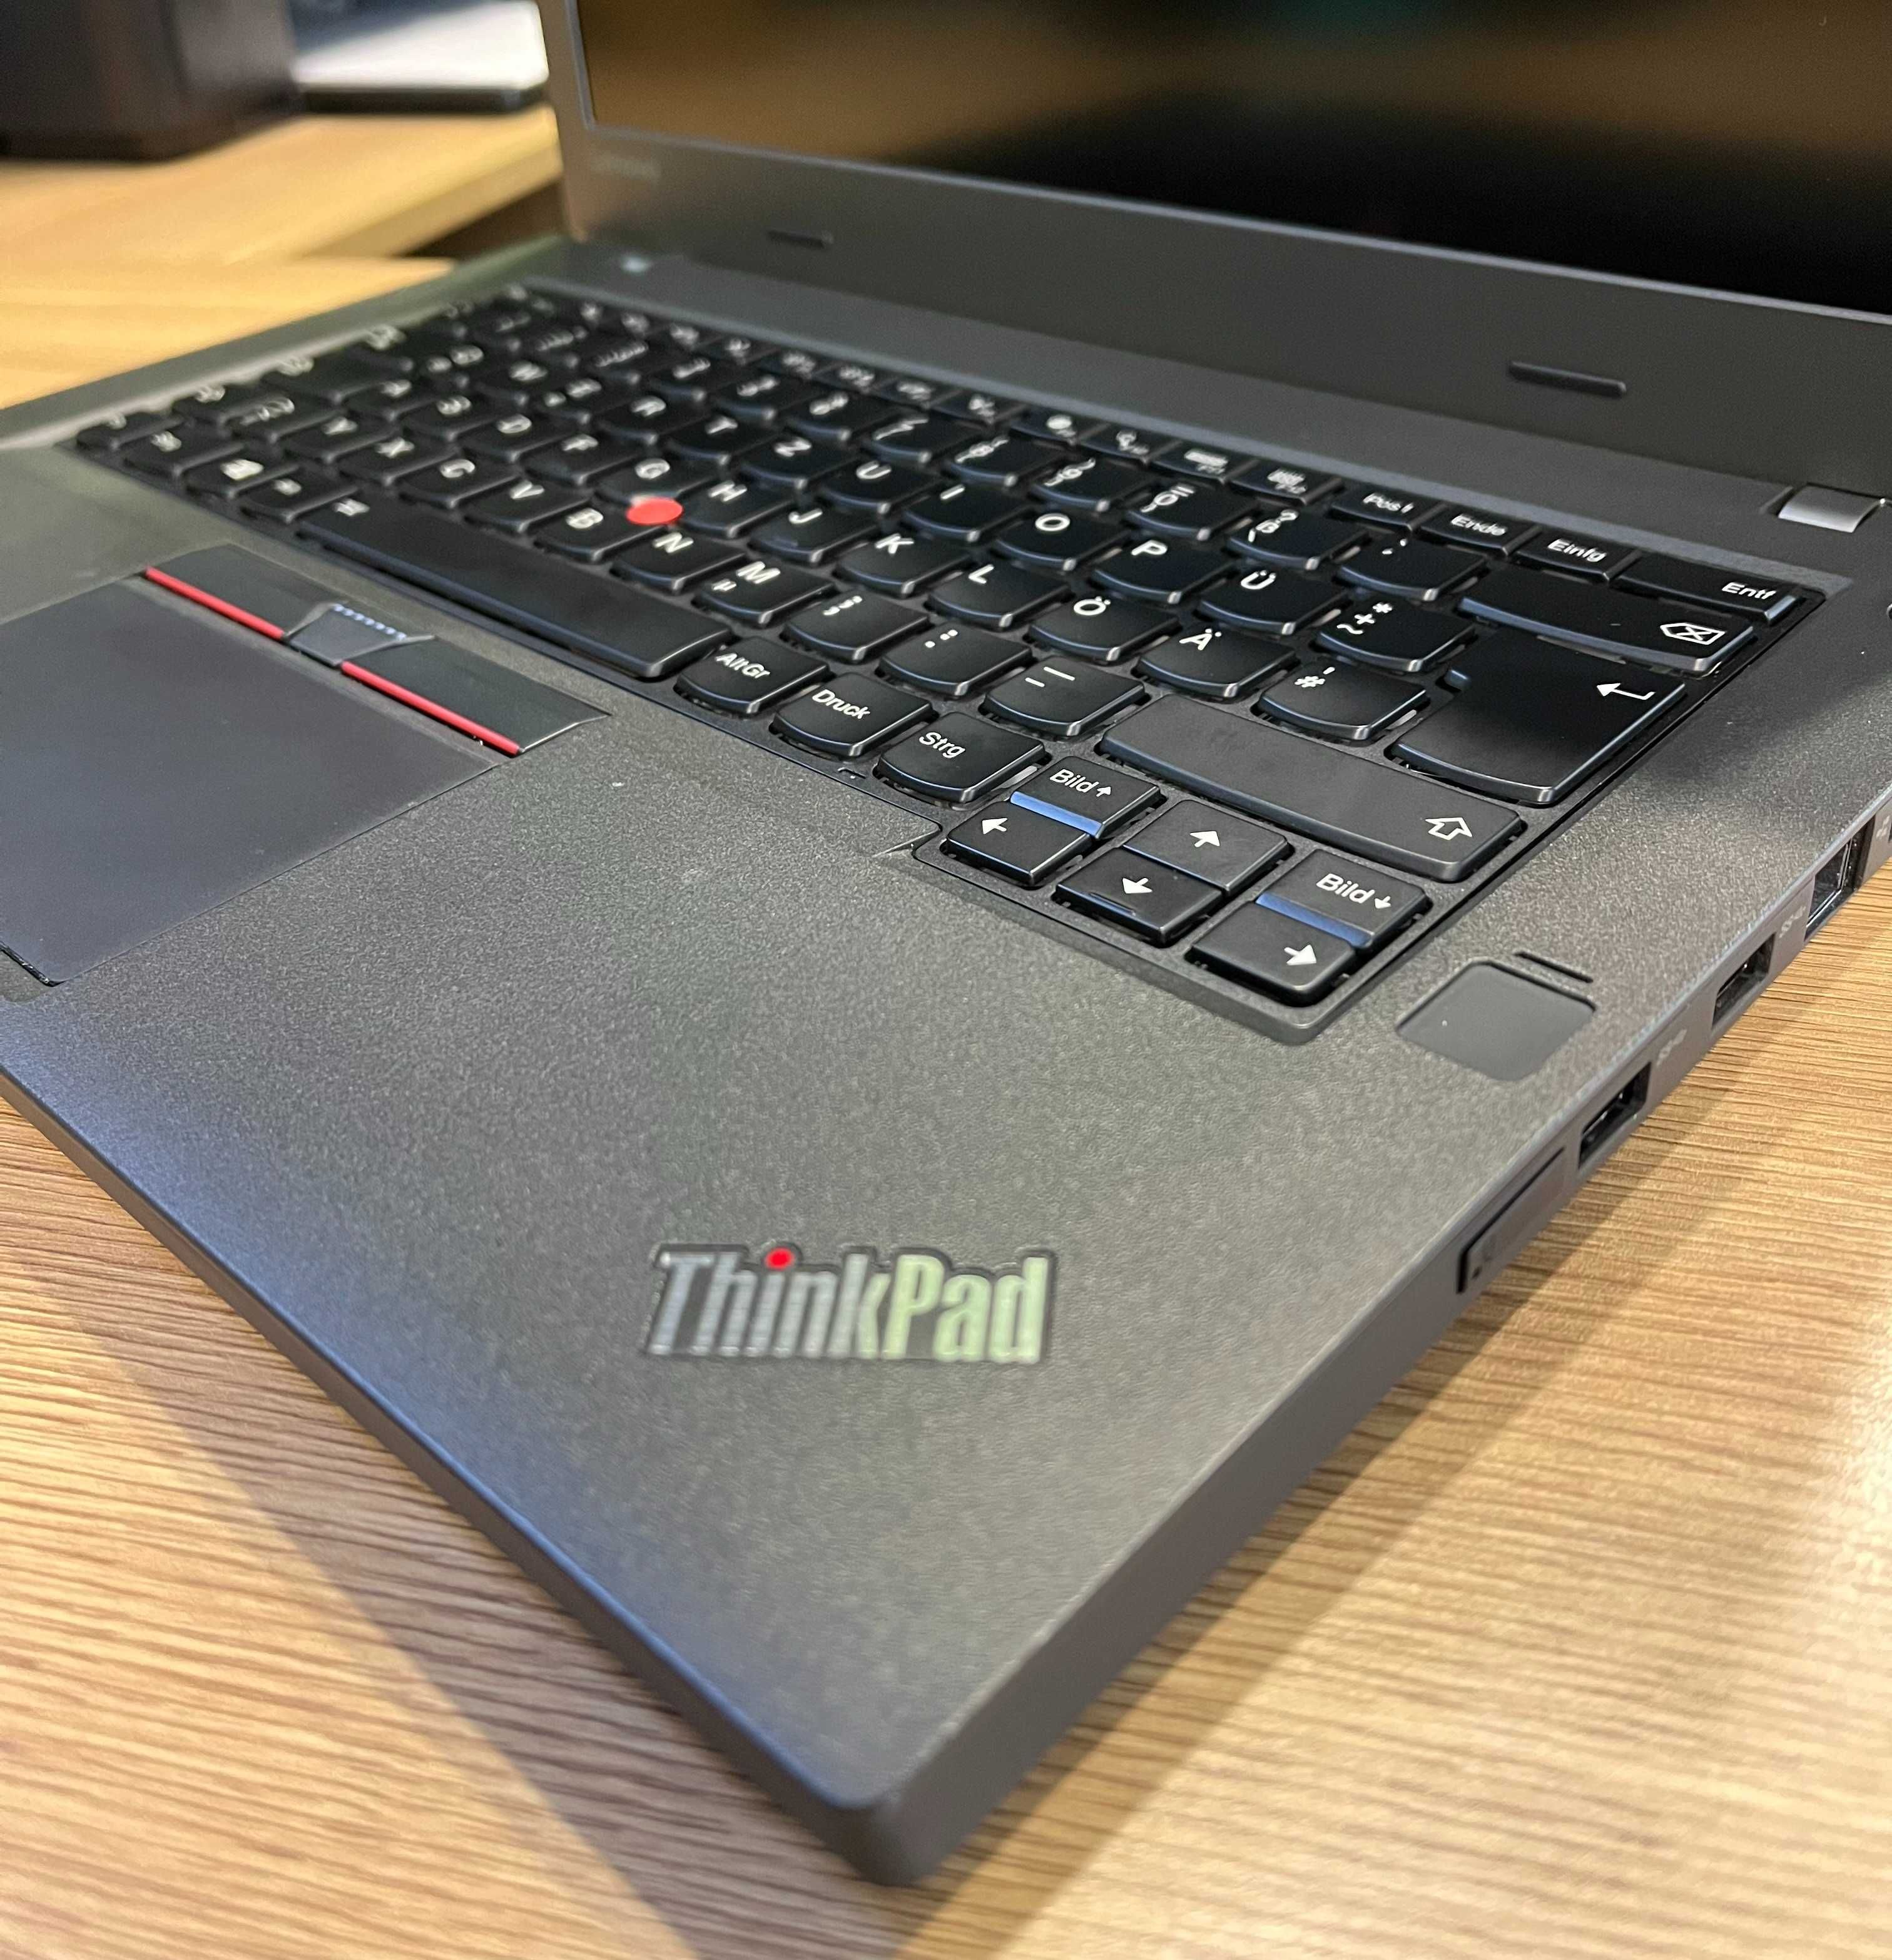 ThinkPad LENOVO T470P, Сore i7-7820HQ  - 2.9/3.9 Ghz 4/8